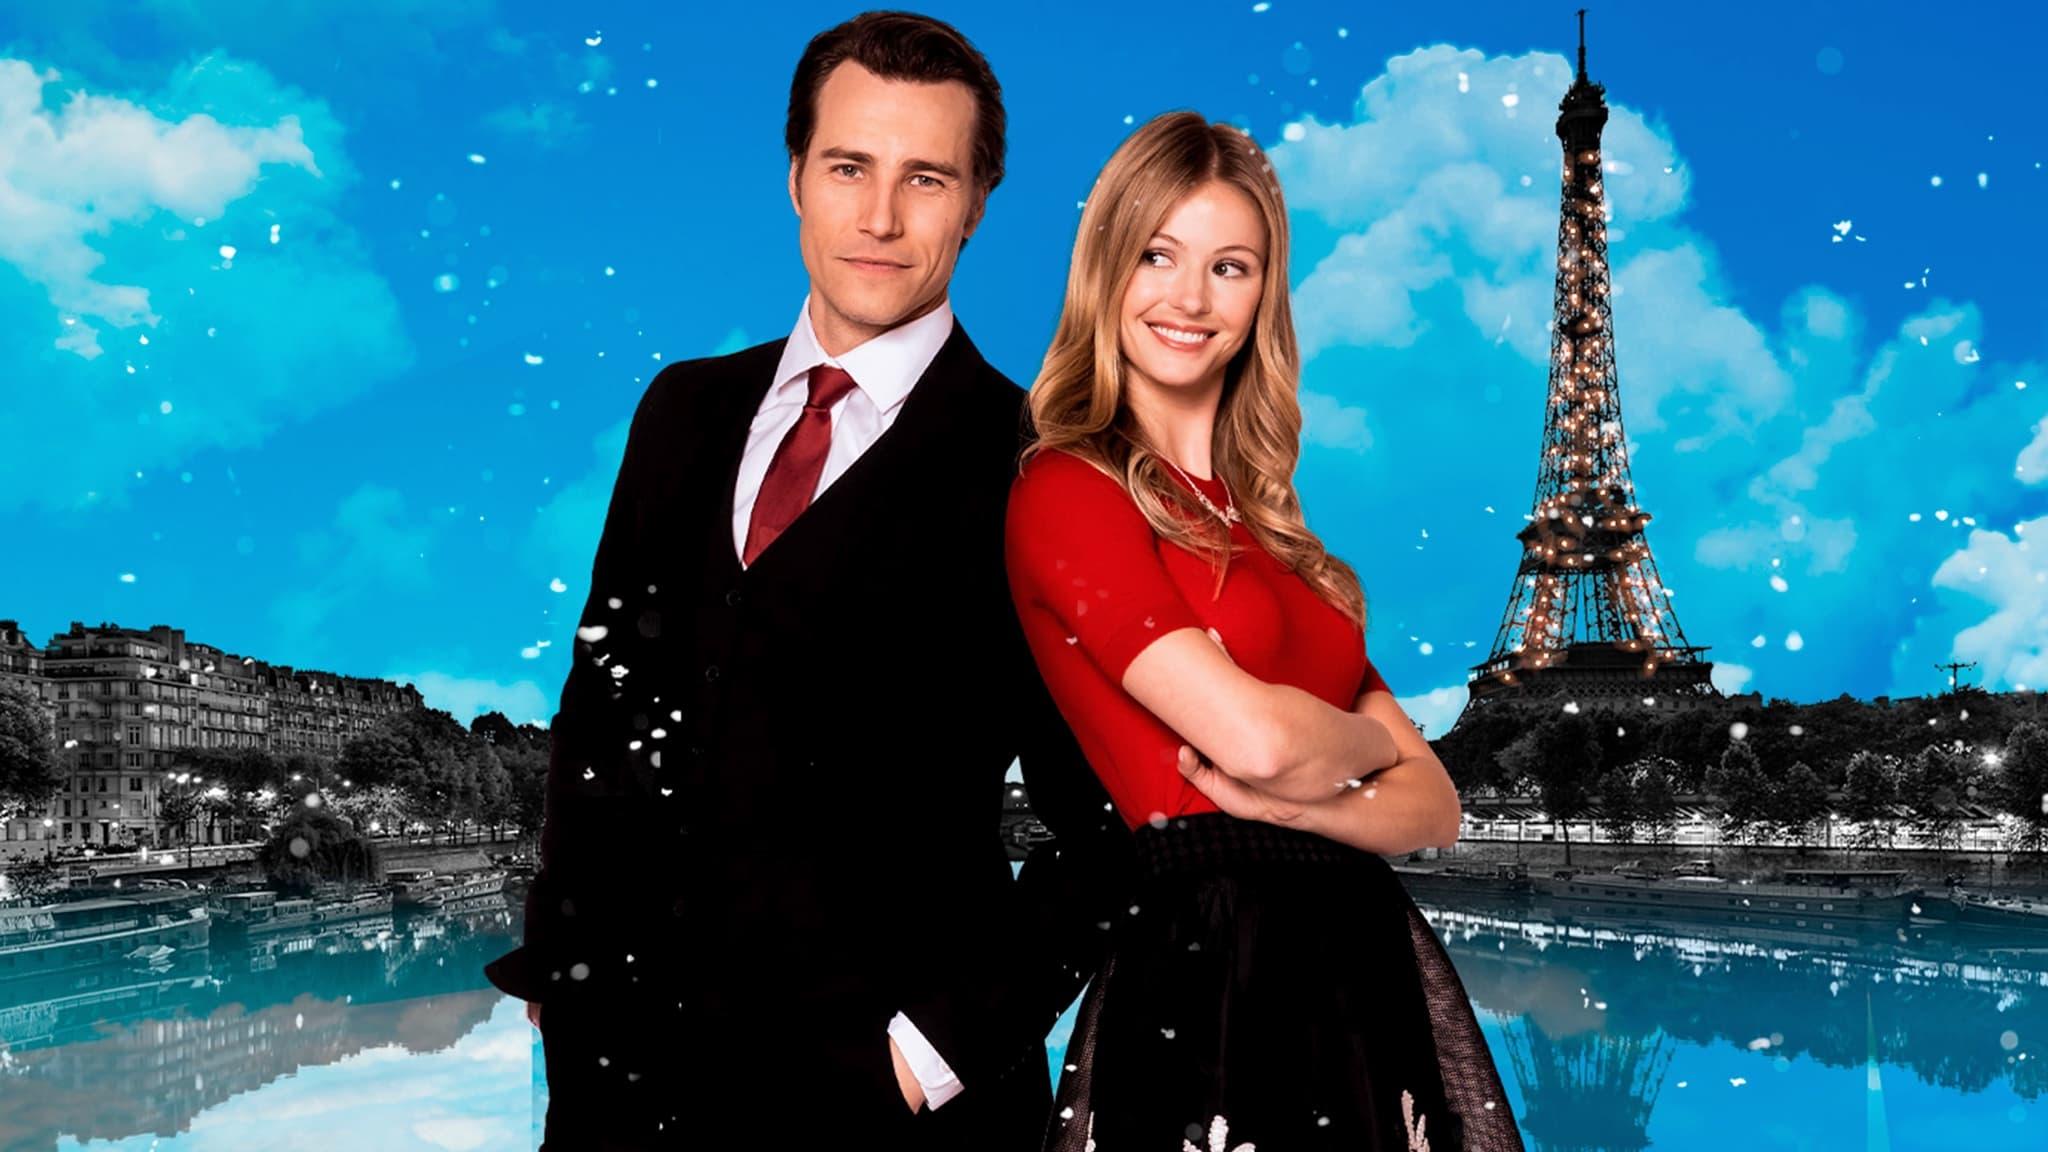 Christmas in Paris backdrop